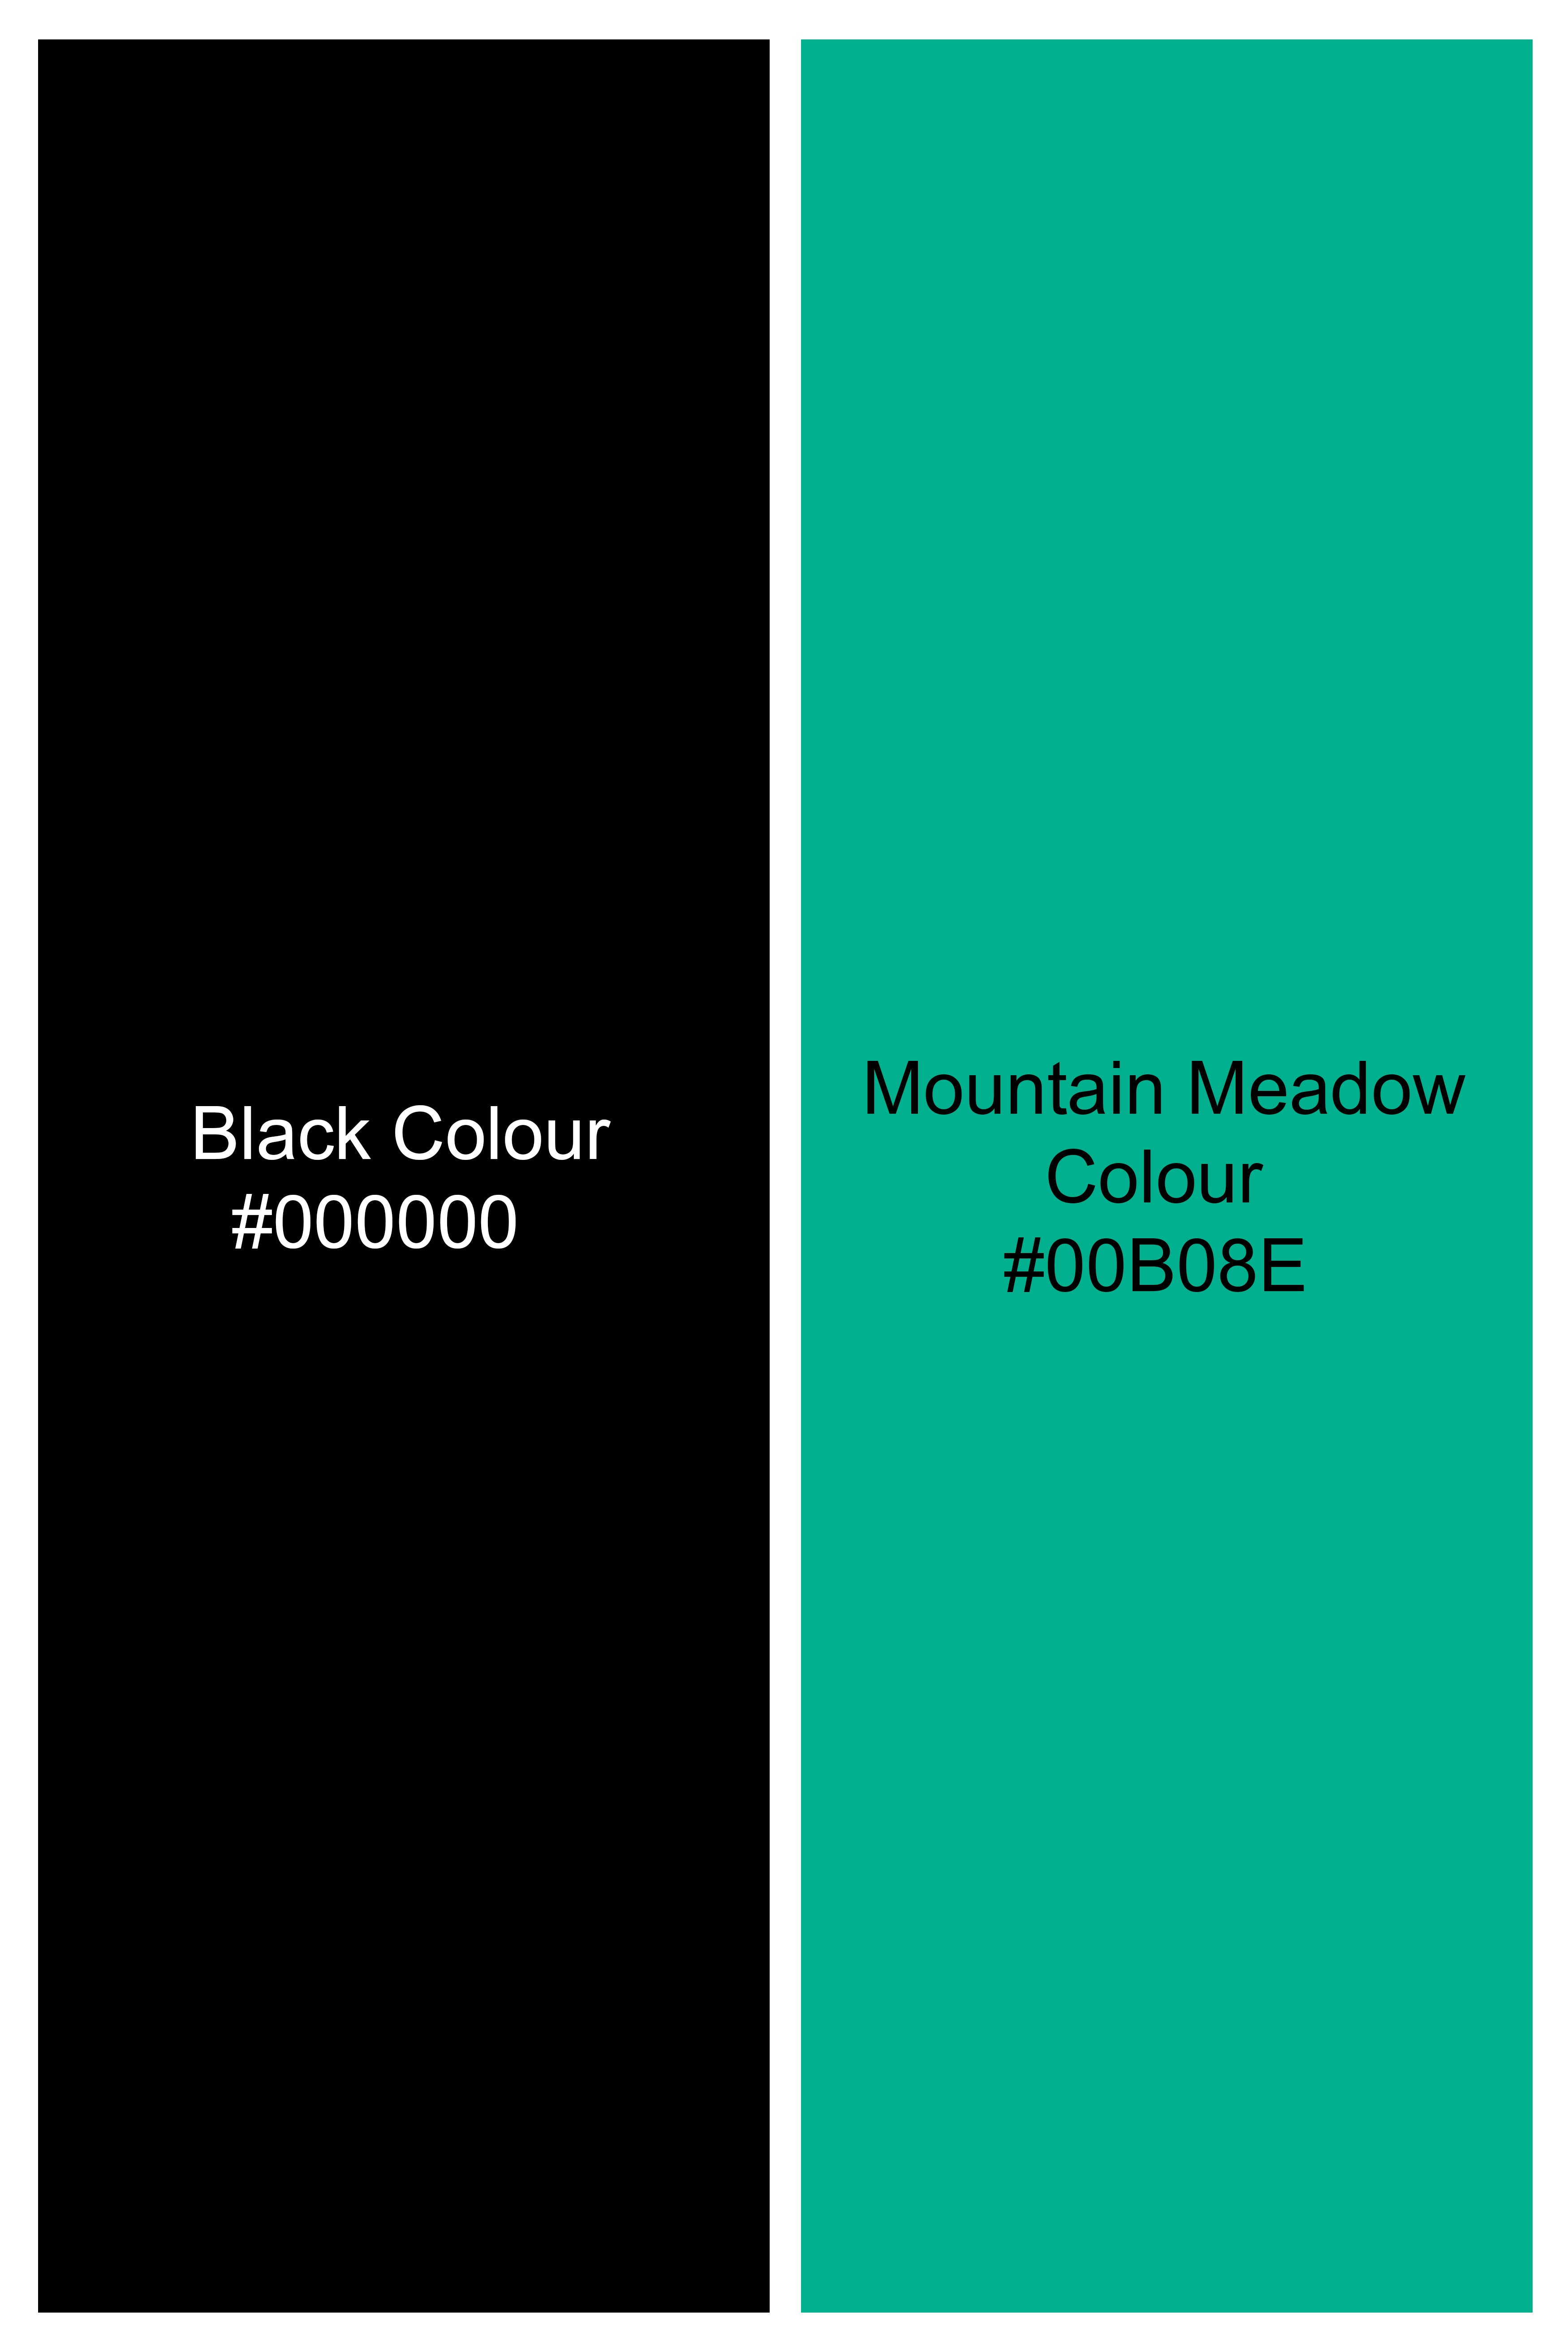 Jade Black and Mountain Meadow Green Premium Cotton Jersey T-Shirt TS909-S, TS909-M, TS909-L, TS909-XL, TS909-XXL